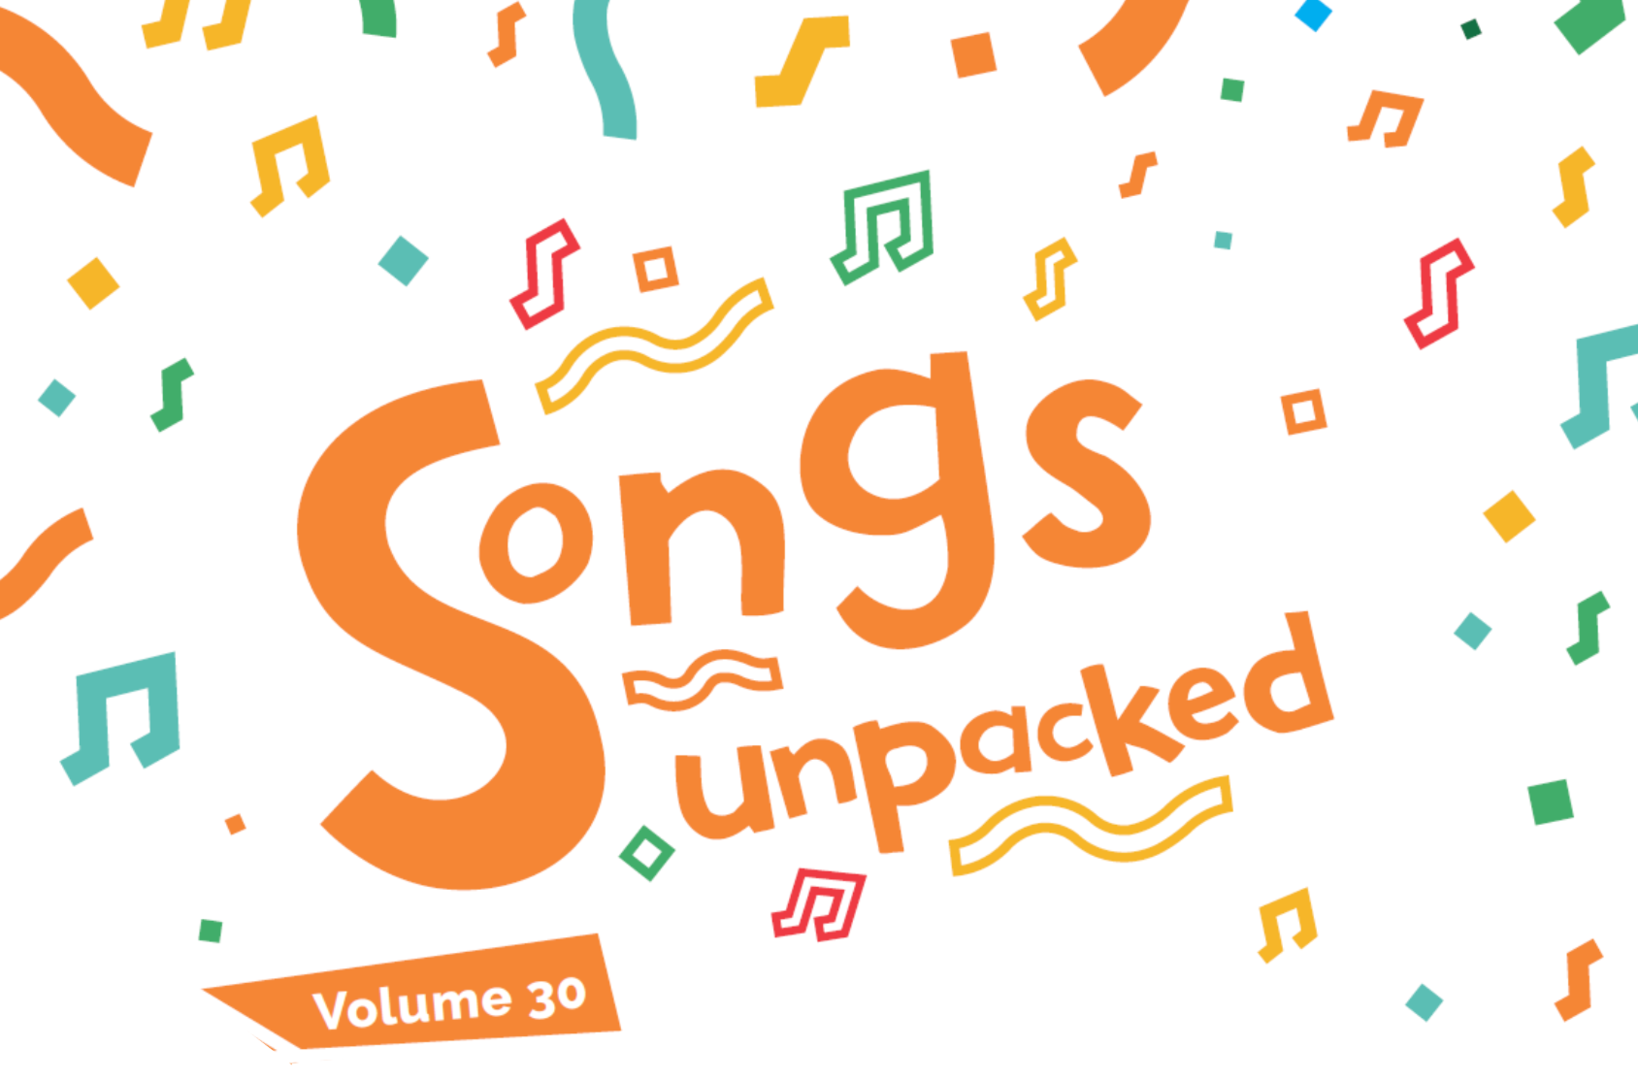 orange text 'Songs unpacked'